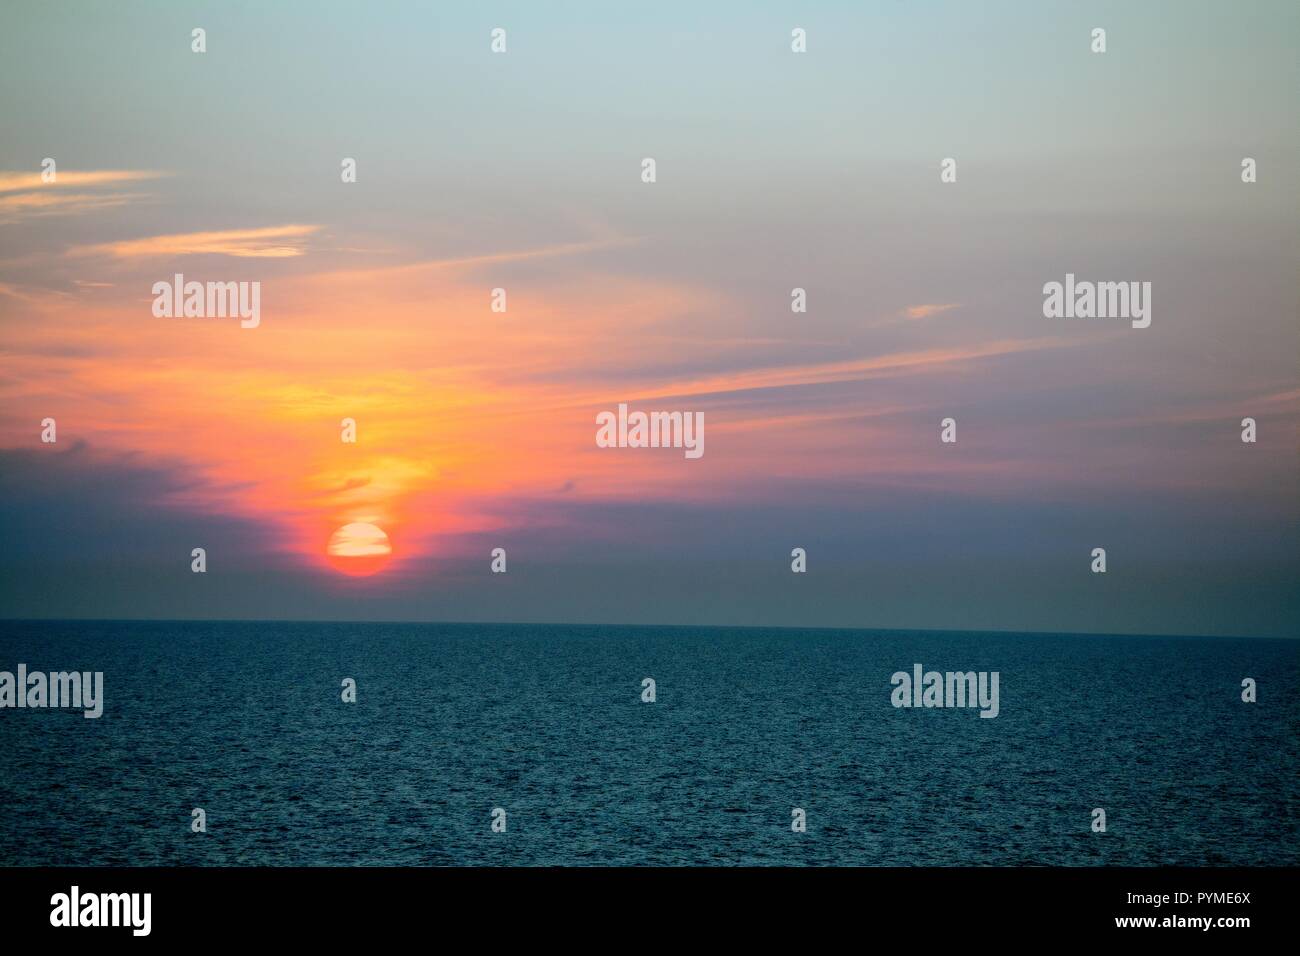 SETTING SUN OVER THE NORTH SEA Stock Photo